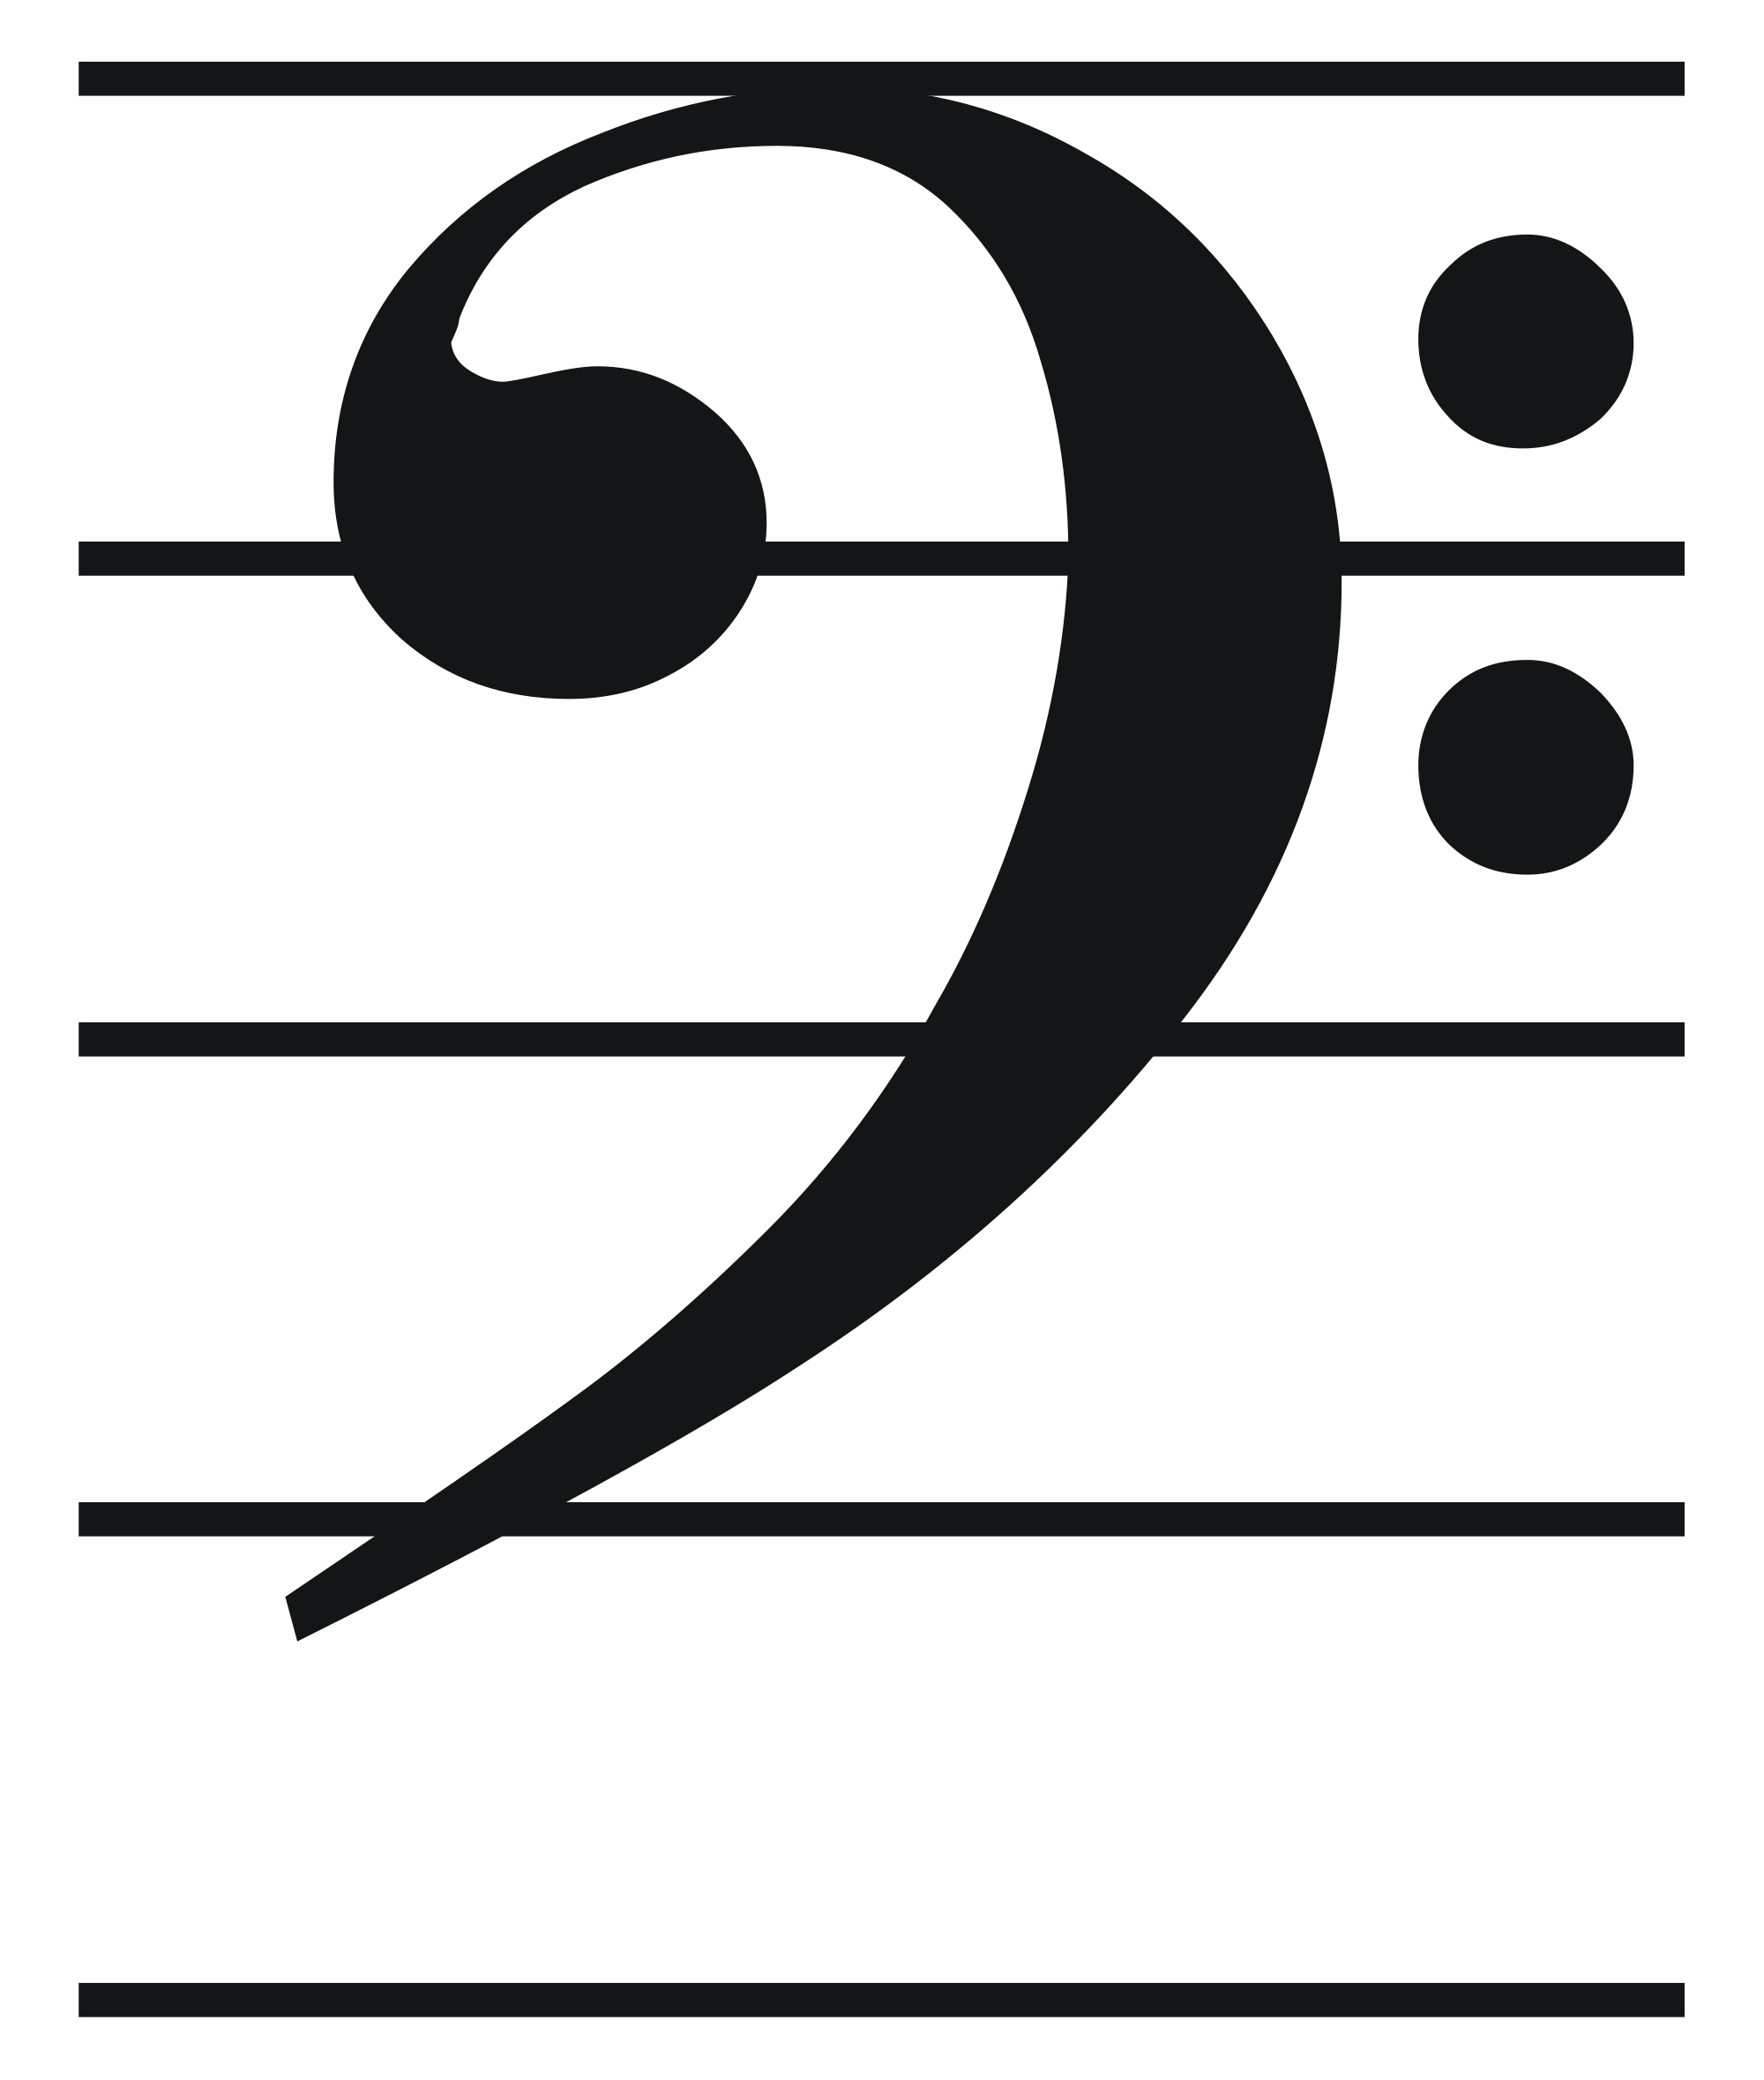 Double bass - Wikipedia, the free encyclopedia